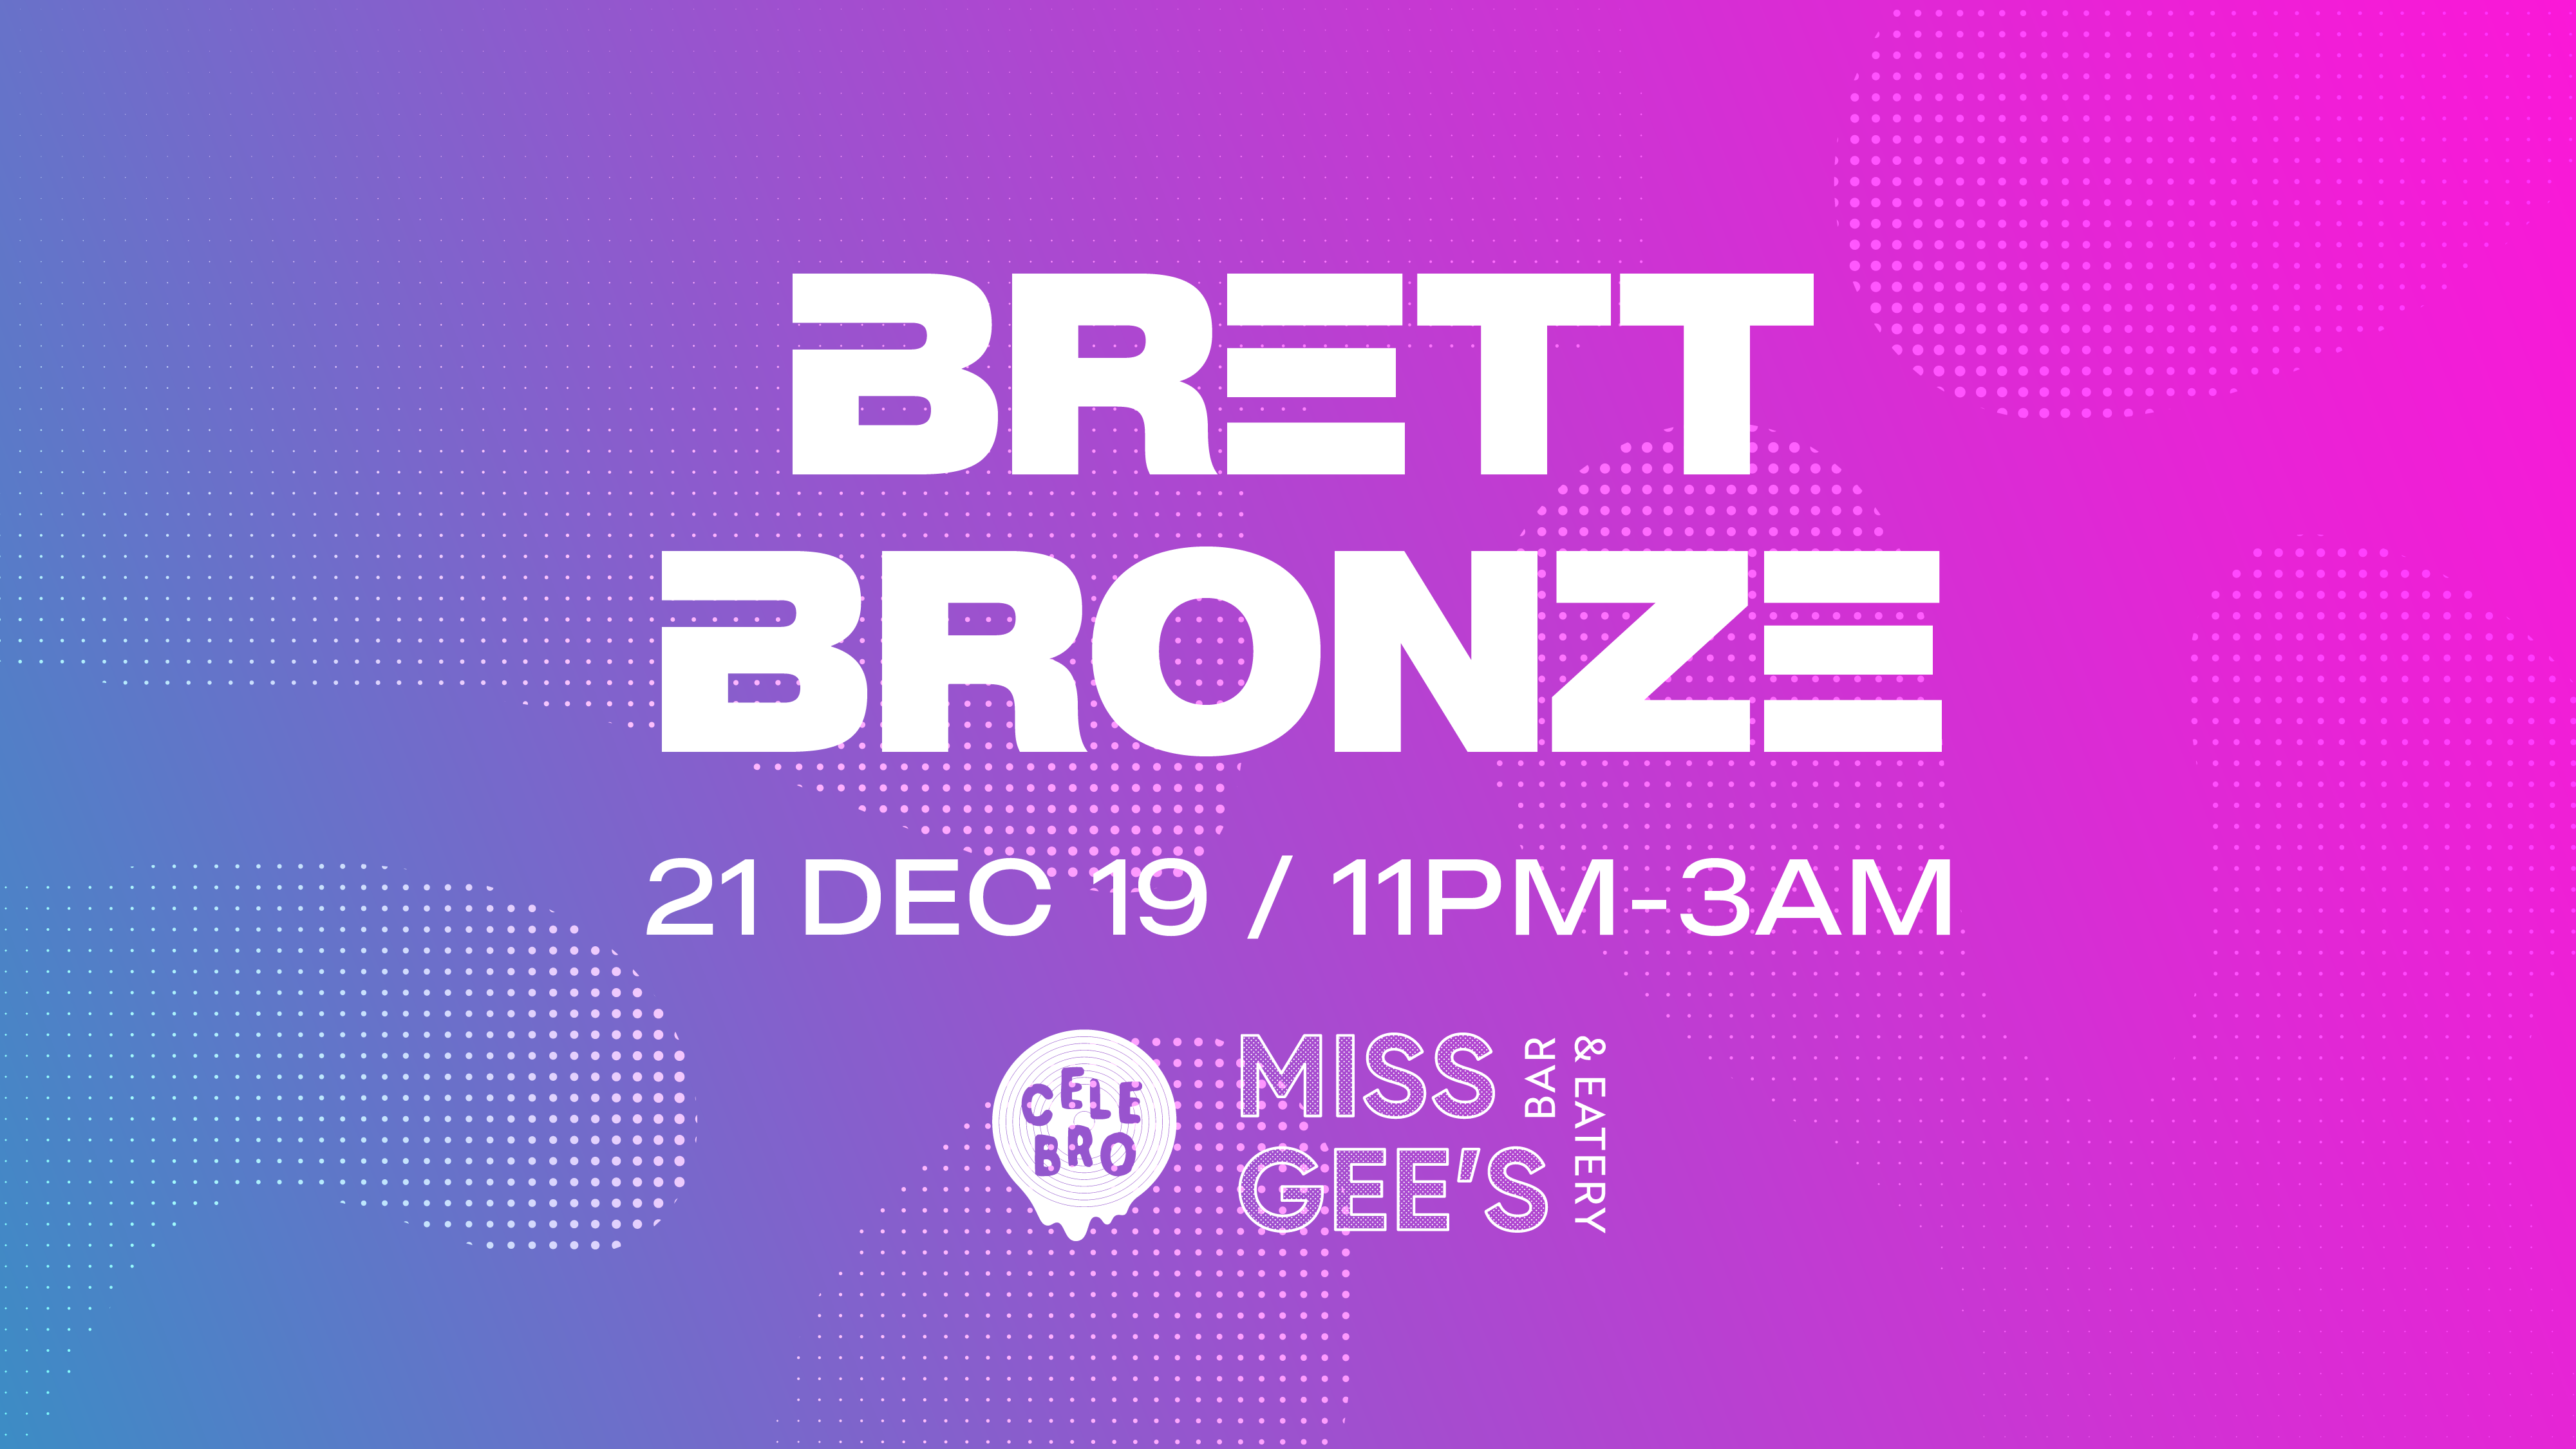 Brett Bronze live at Miss Gees